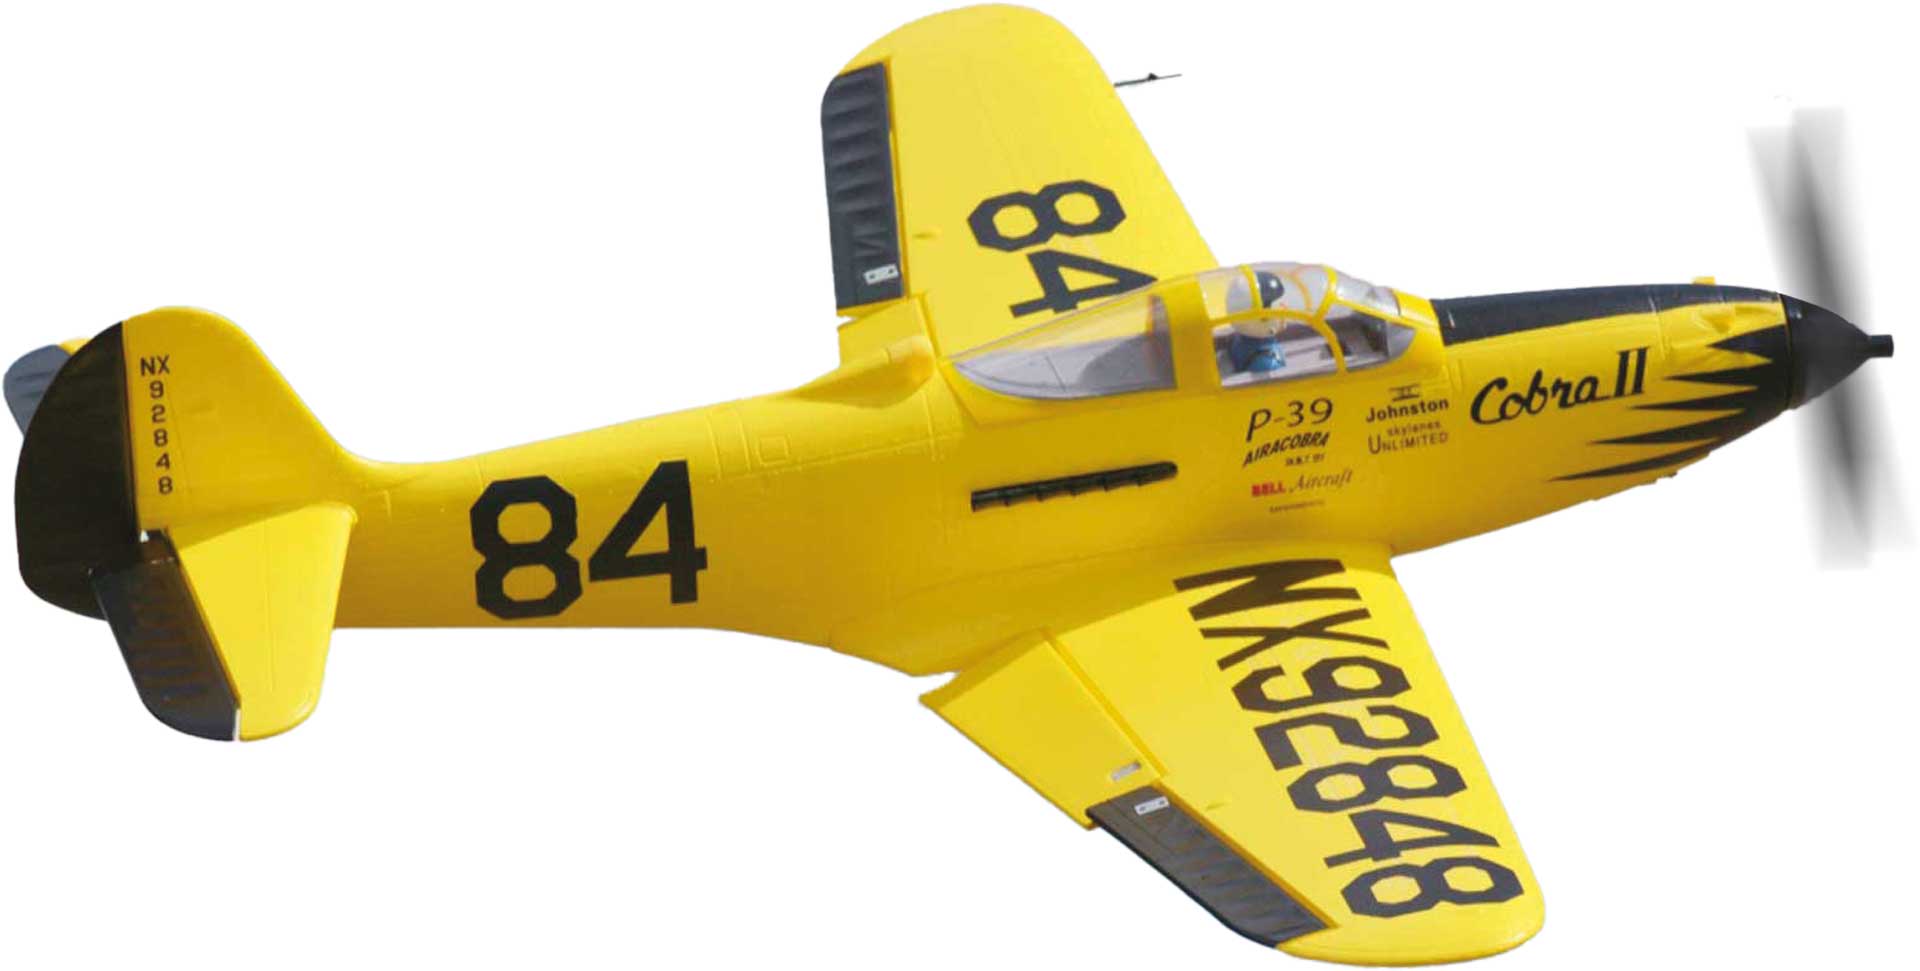 FMS P-39 Airacobra PNP - 98 cm